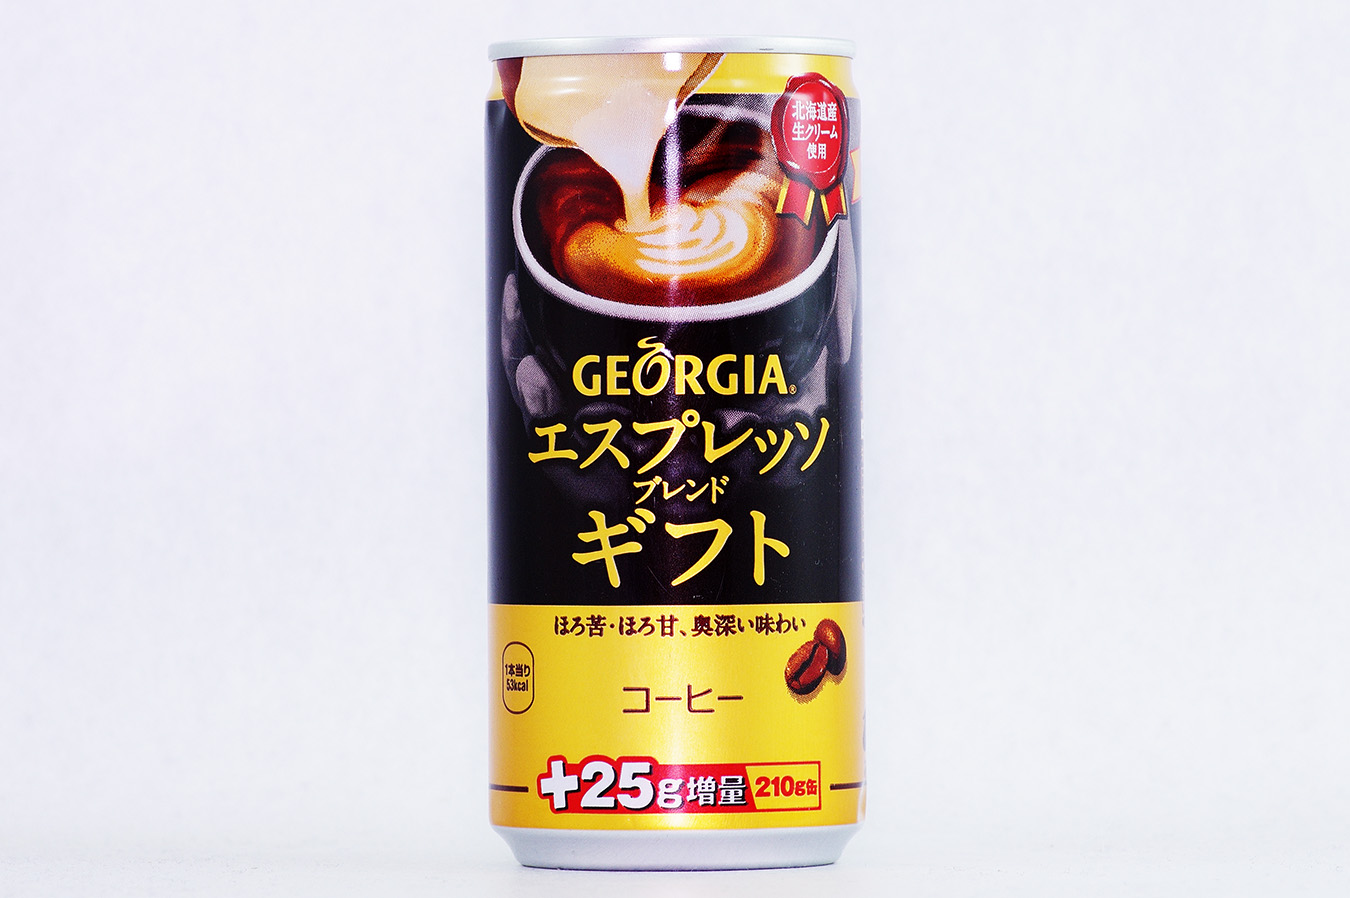 GEORGIA エスプレッソブレンドギフト +25g増量缶 2016年12月